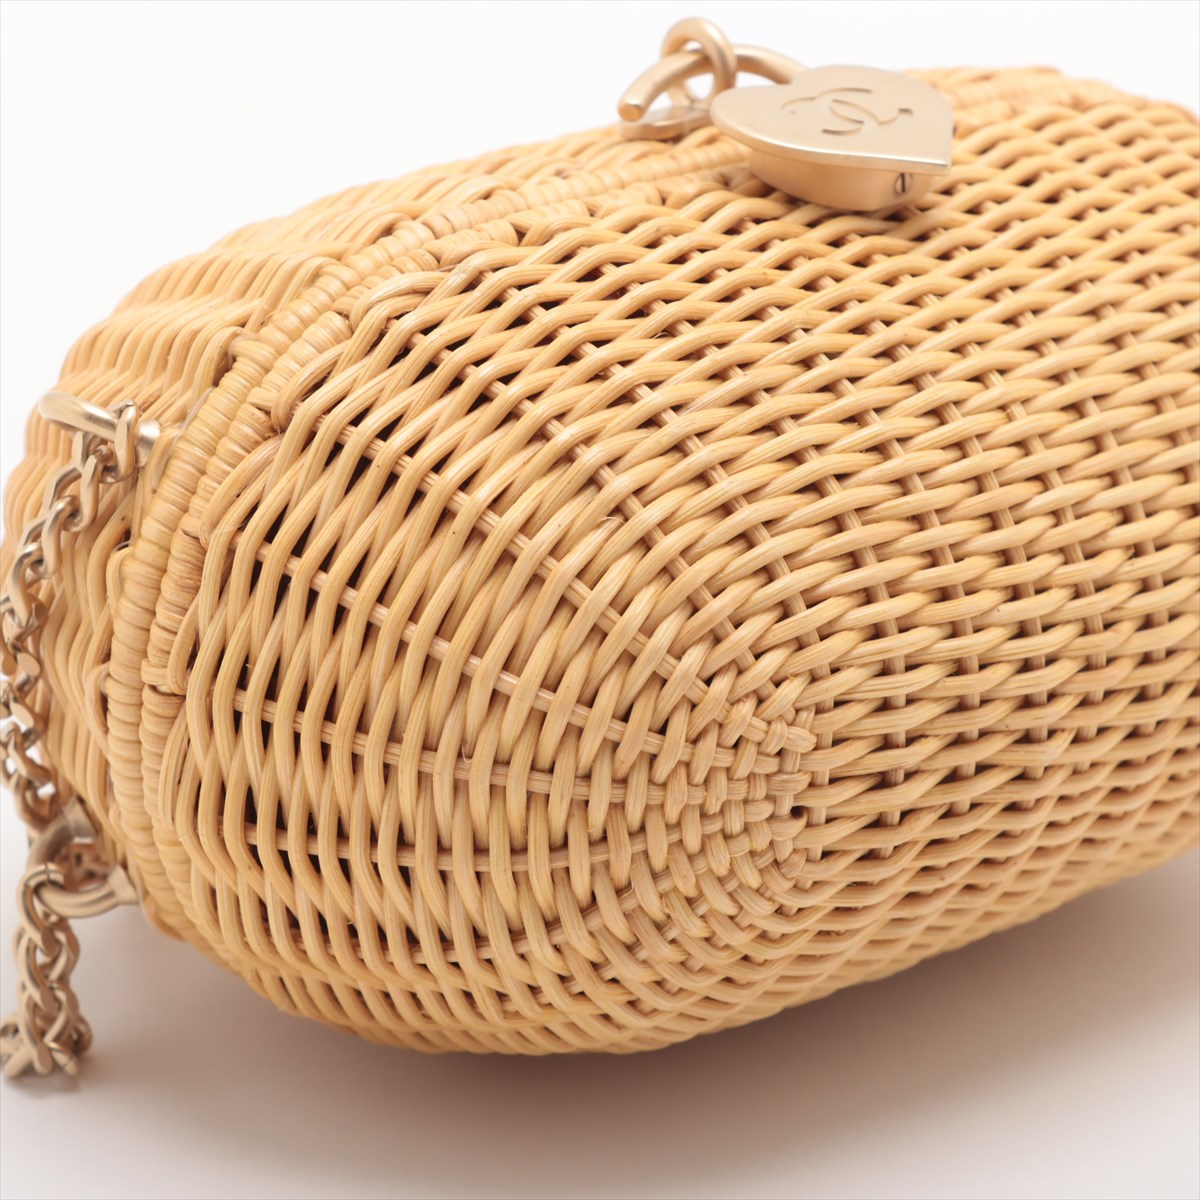 Chanel Coco Latan Chain Shoulder Bag Bag Beige G  9th